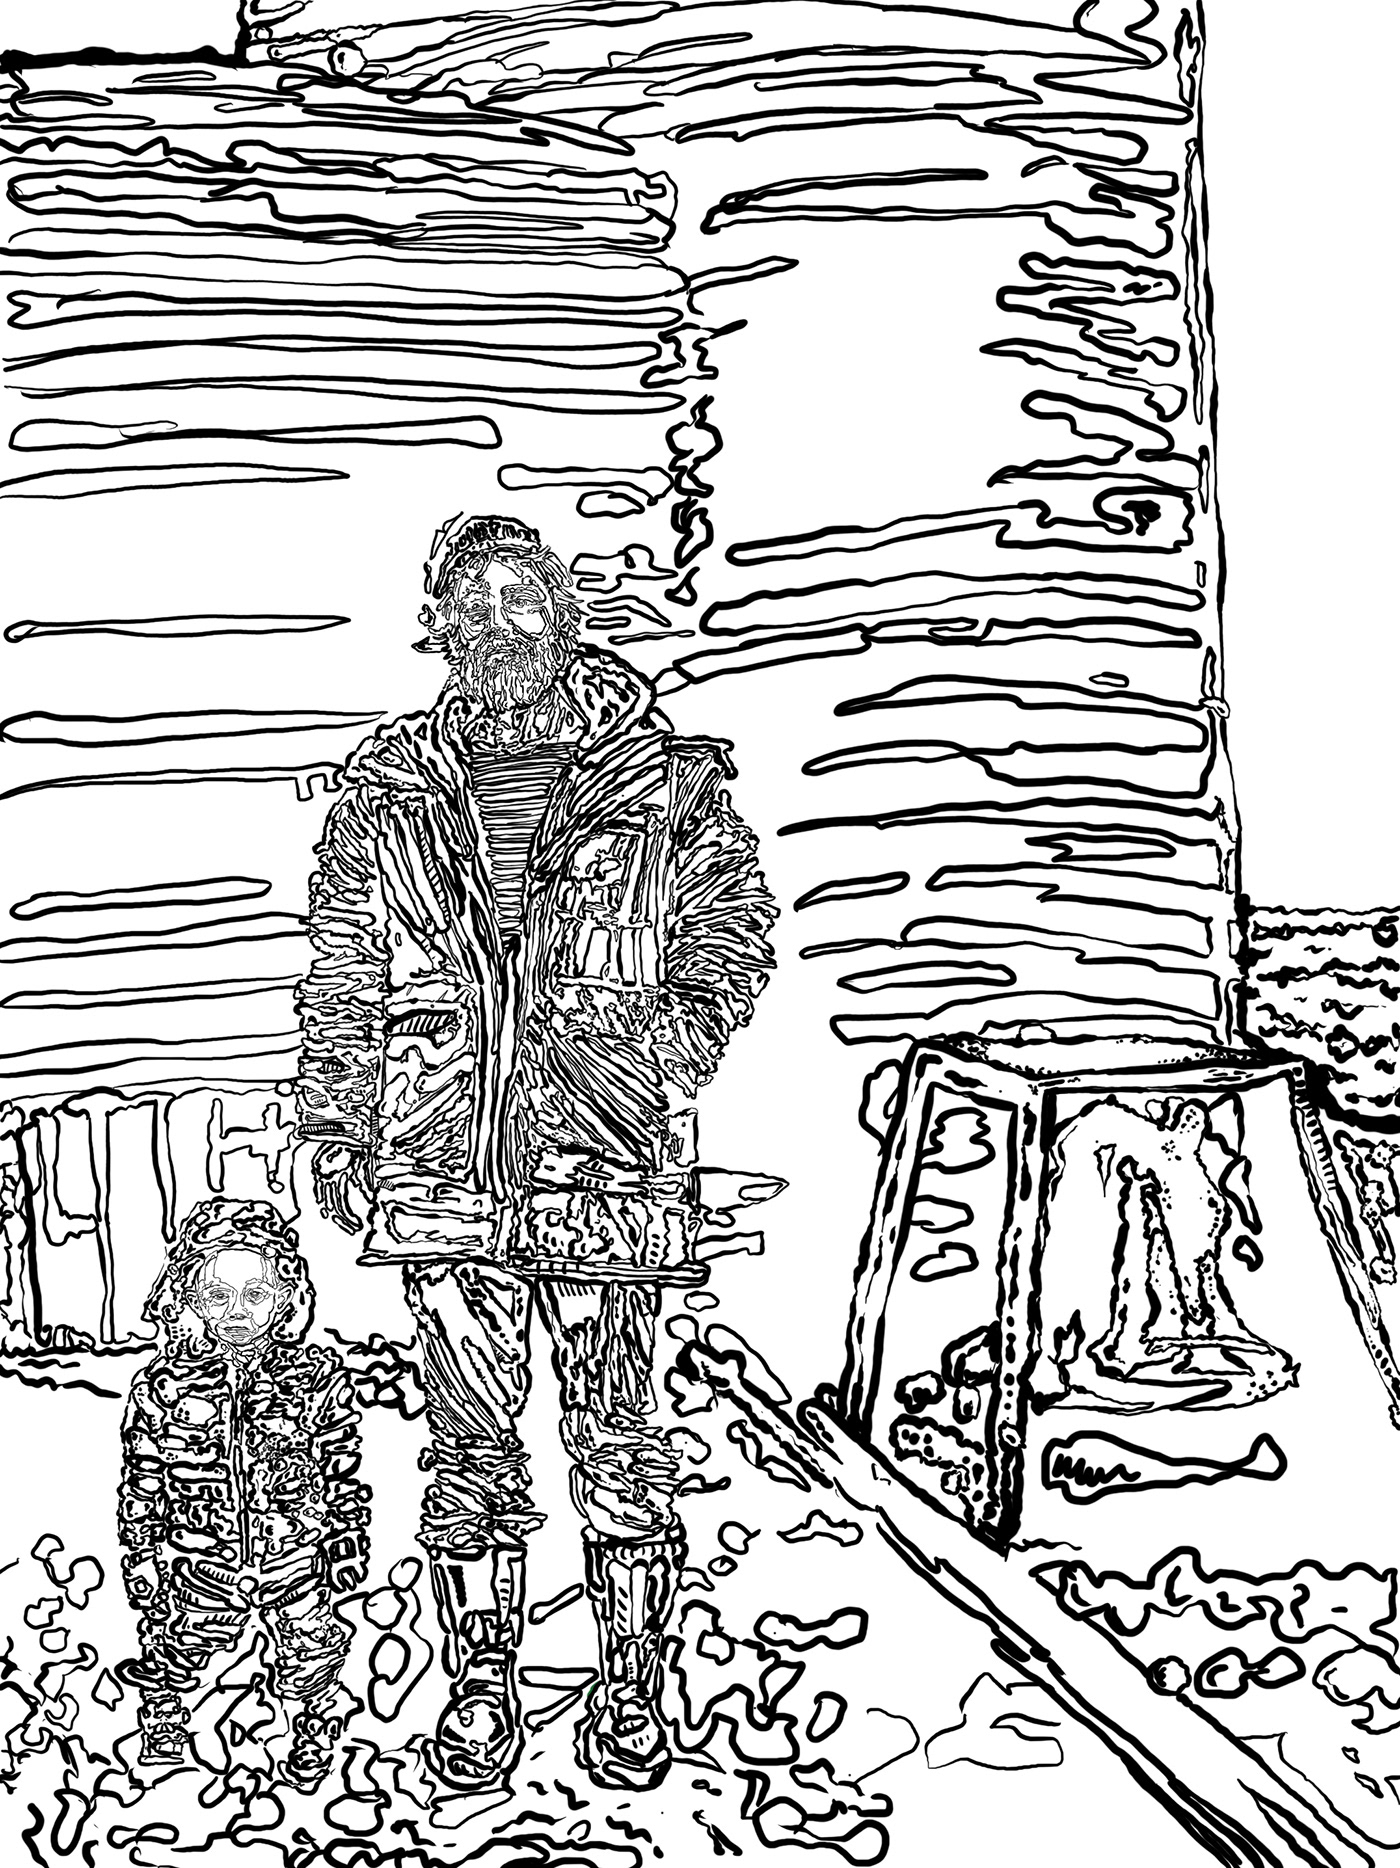 Drawing  Digital Art  cartoon Procreate black and white Nashville johnkaneart.com Nashville Artist